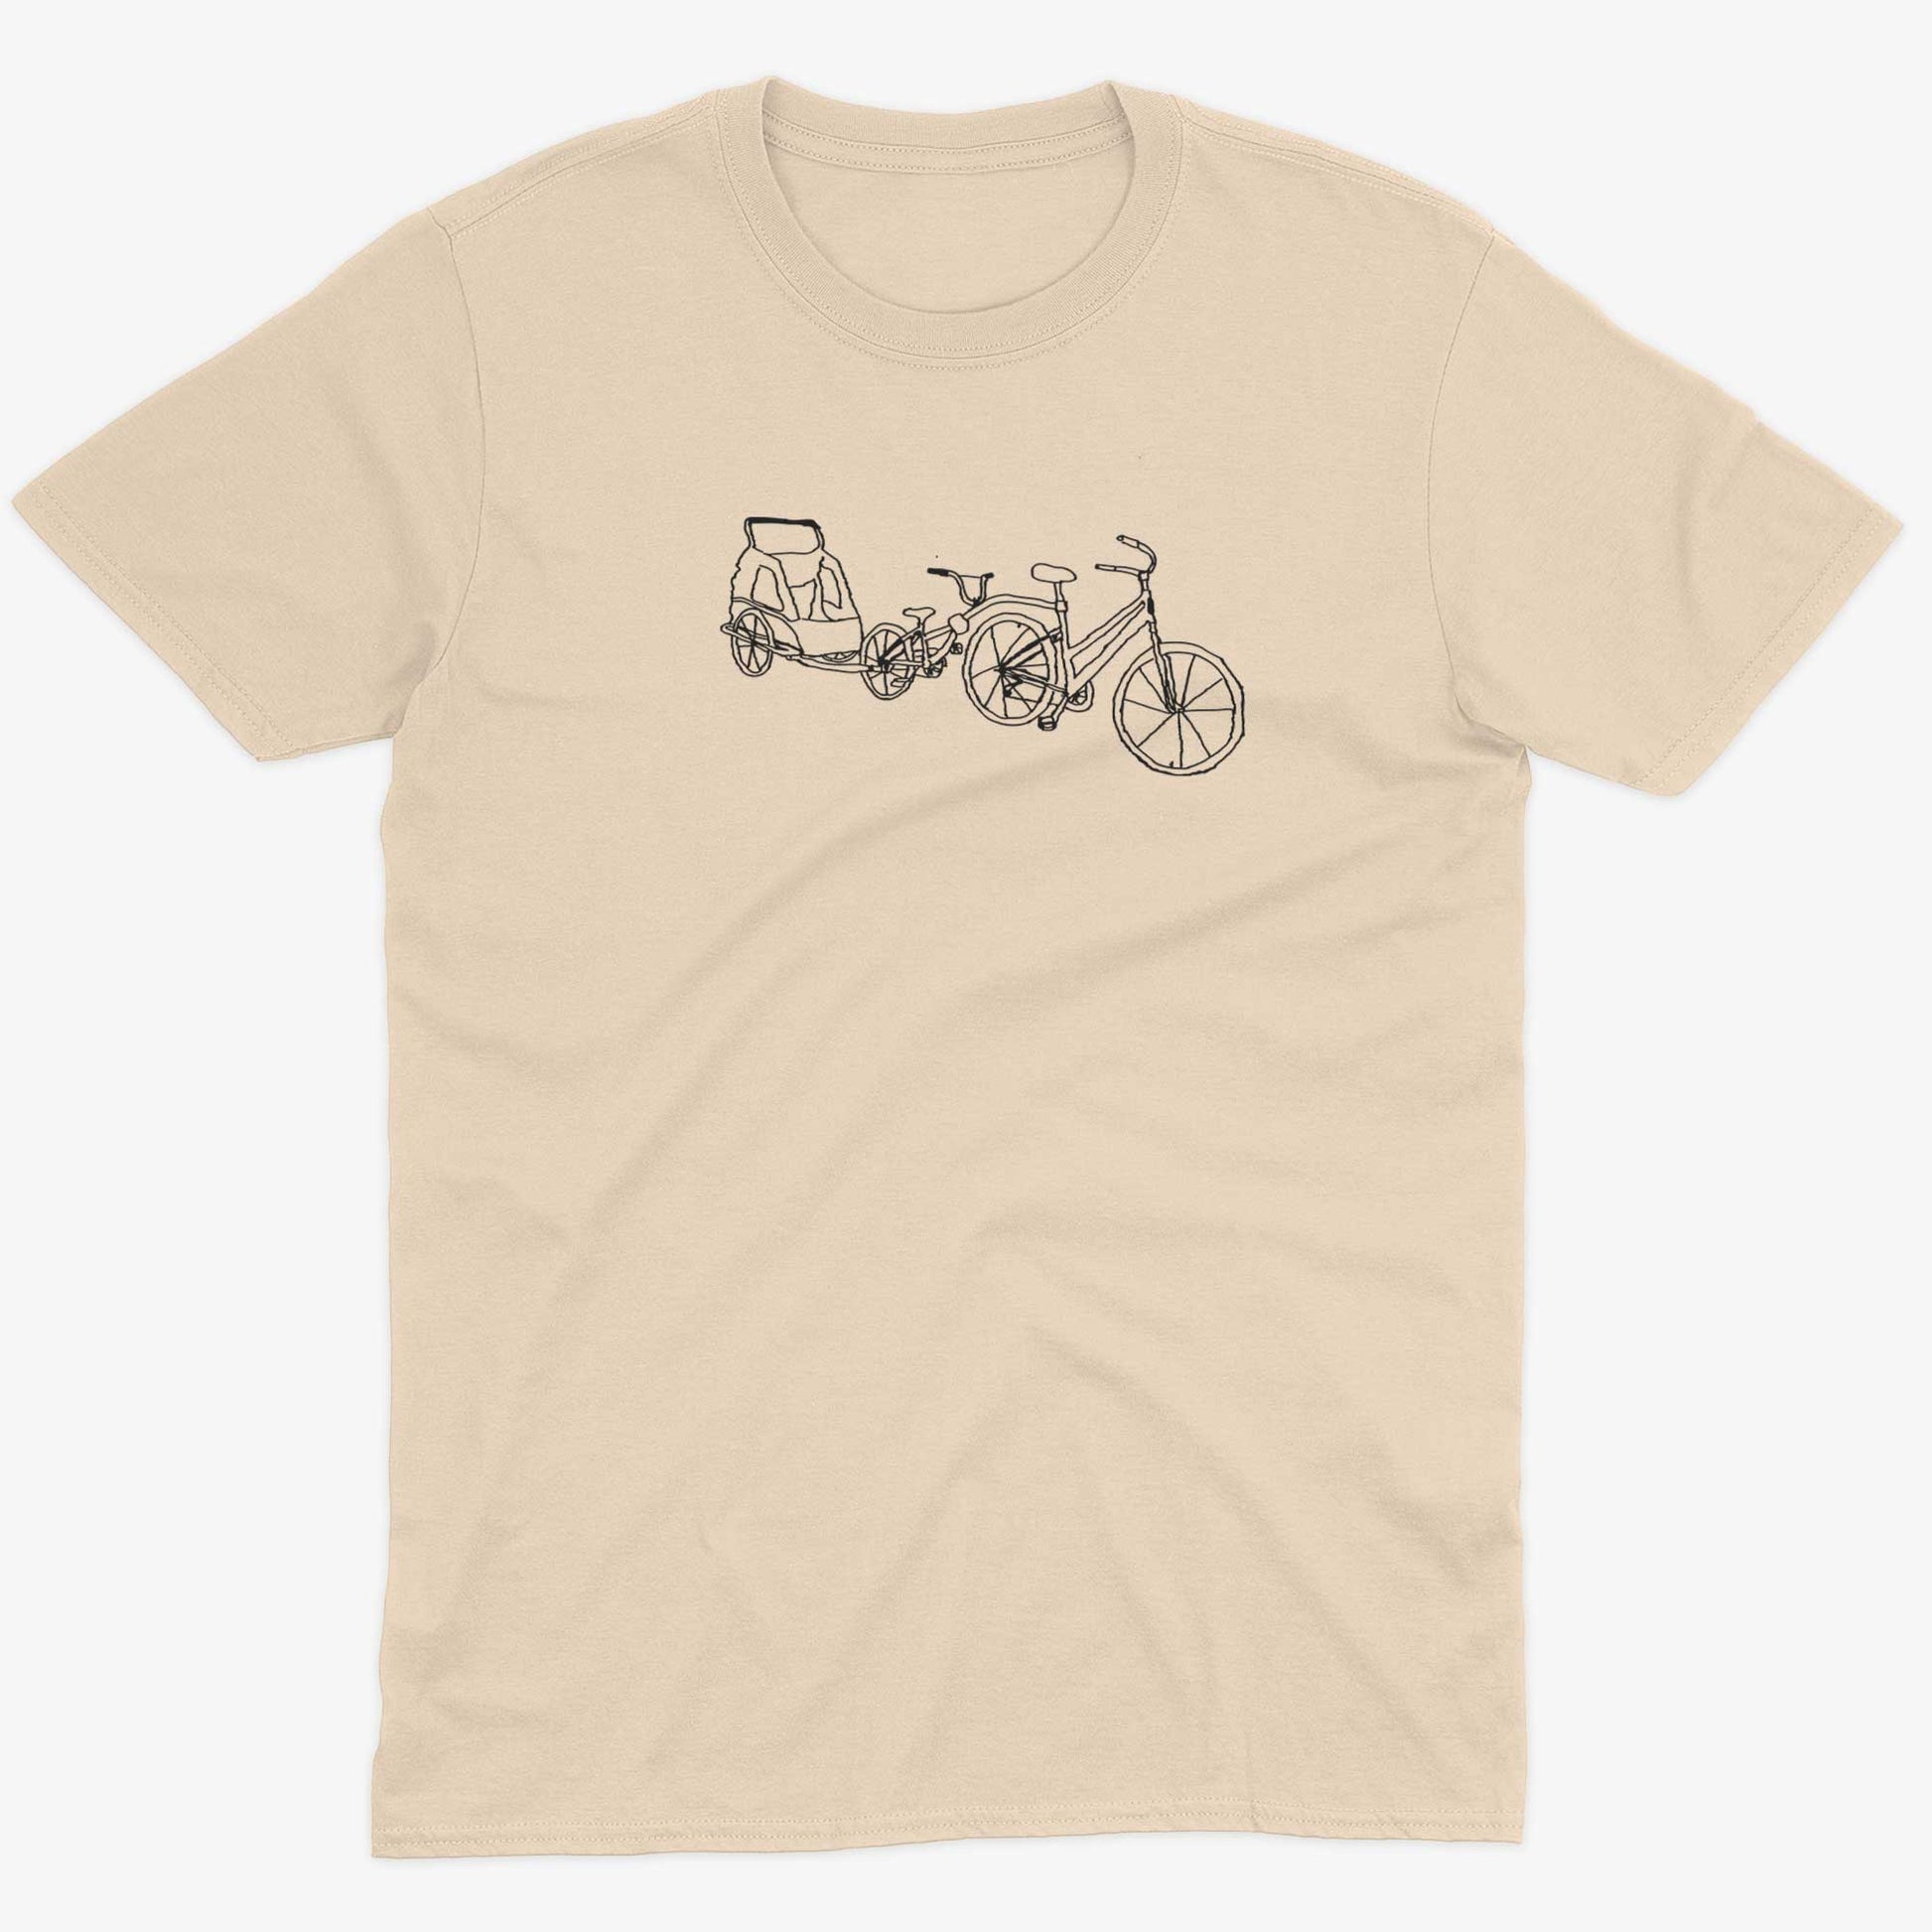 Family Bike Caravan Unisex Or Women's Cotton T-shirt-Organic Natural-Unisex